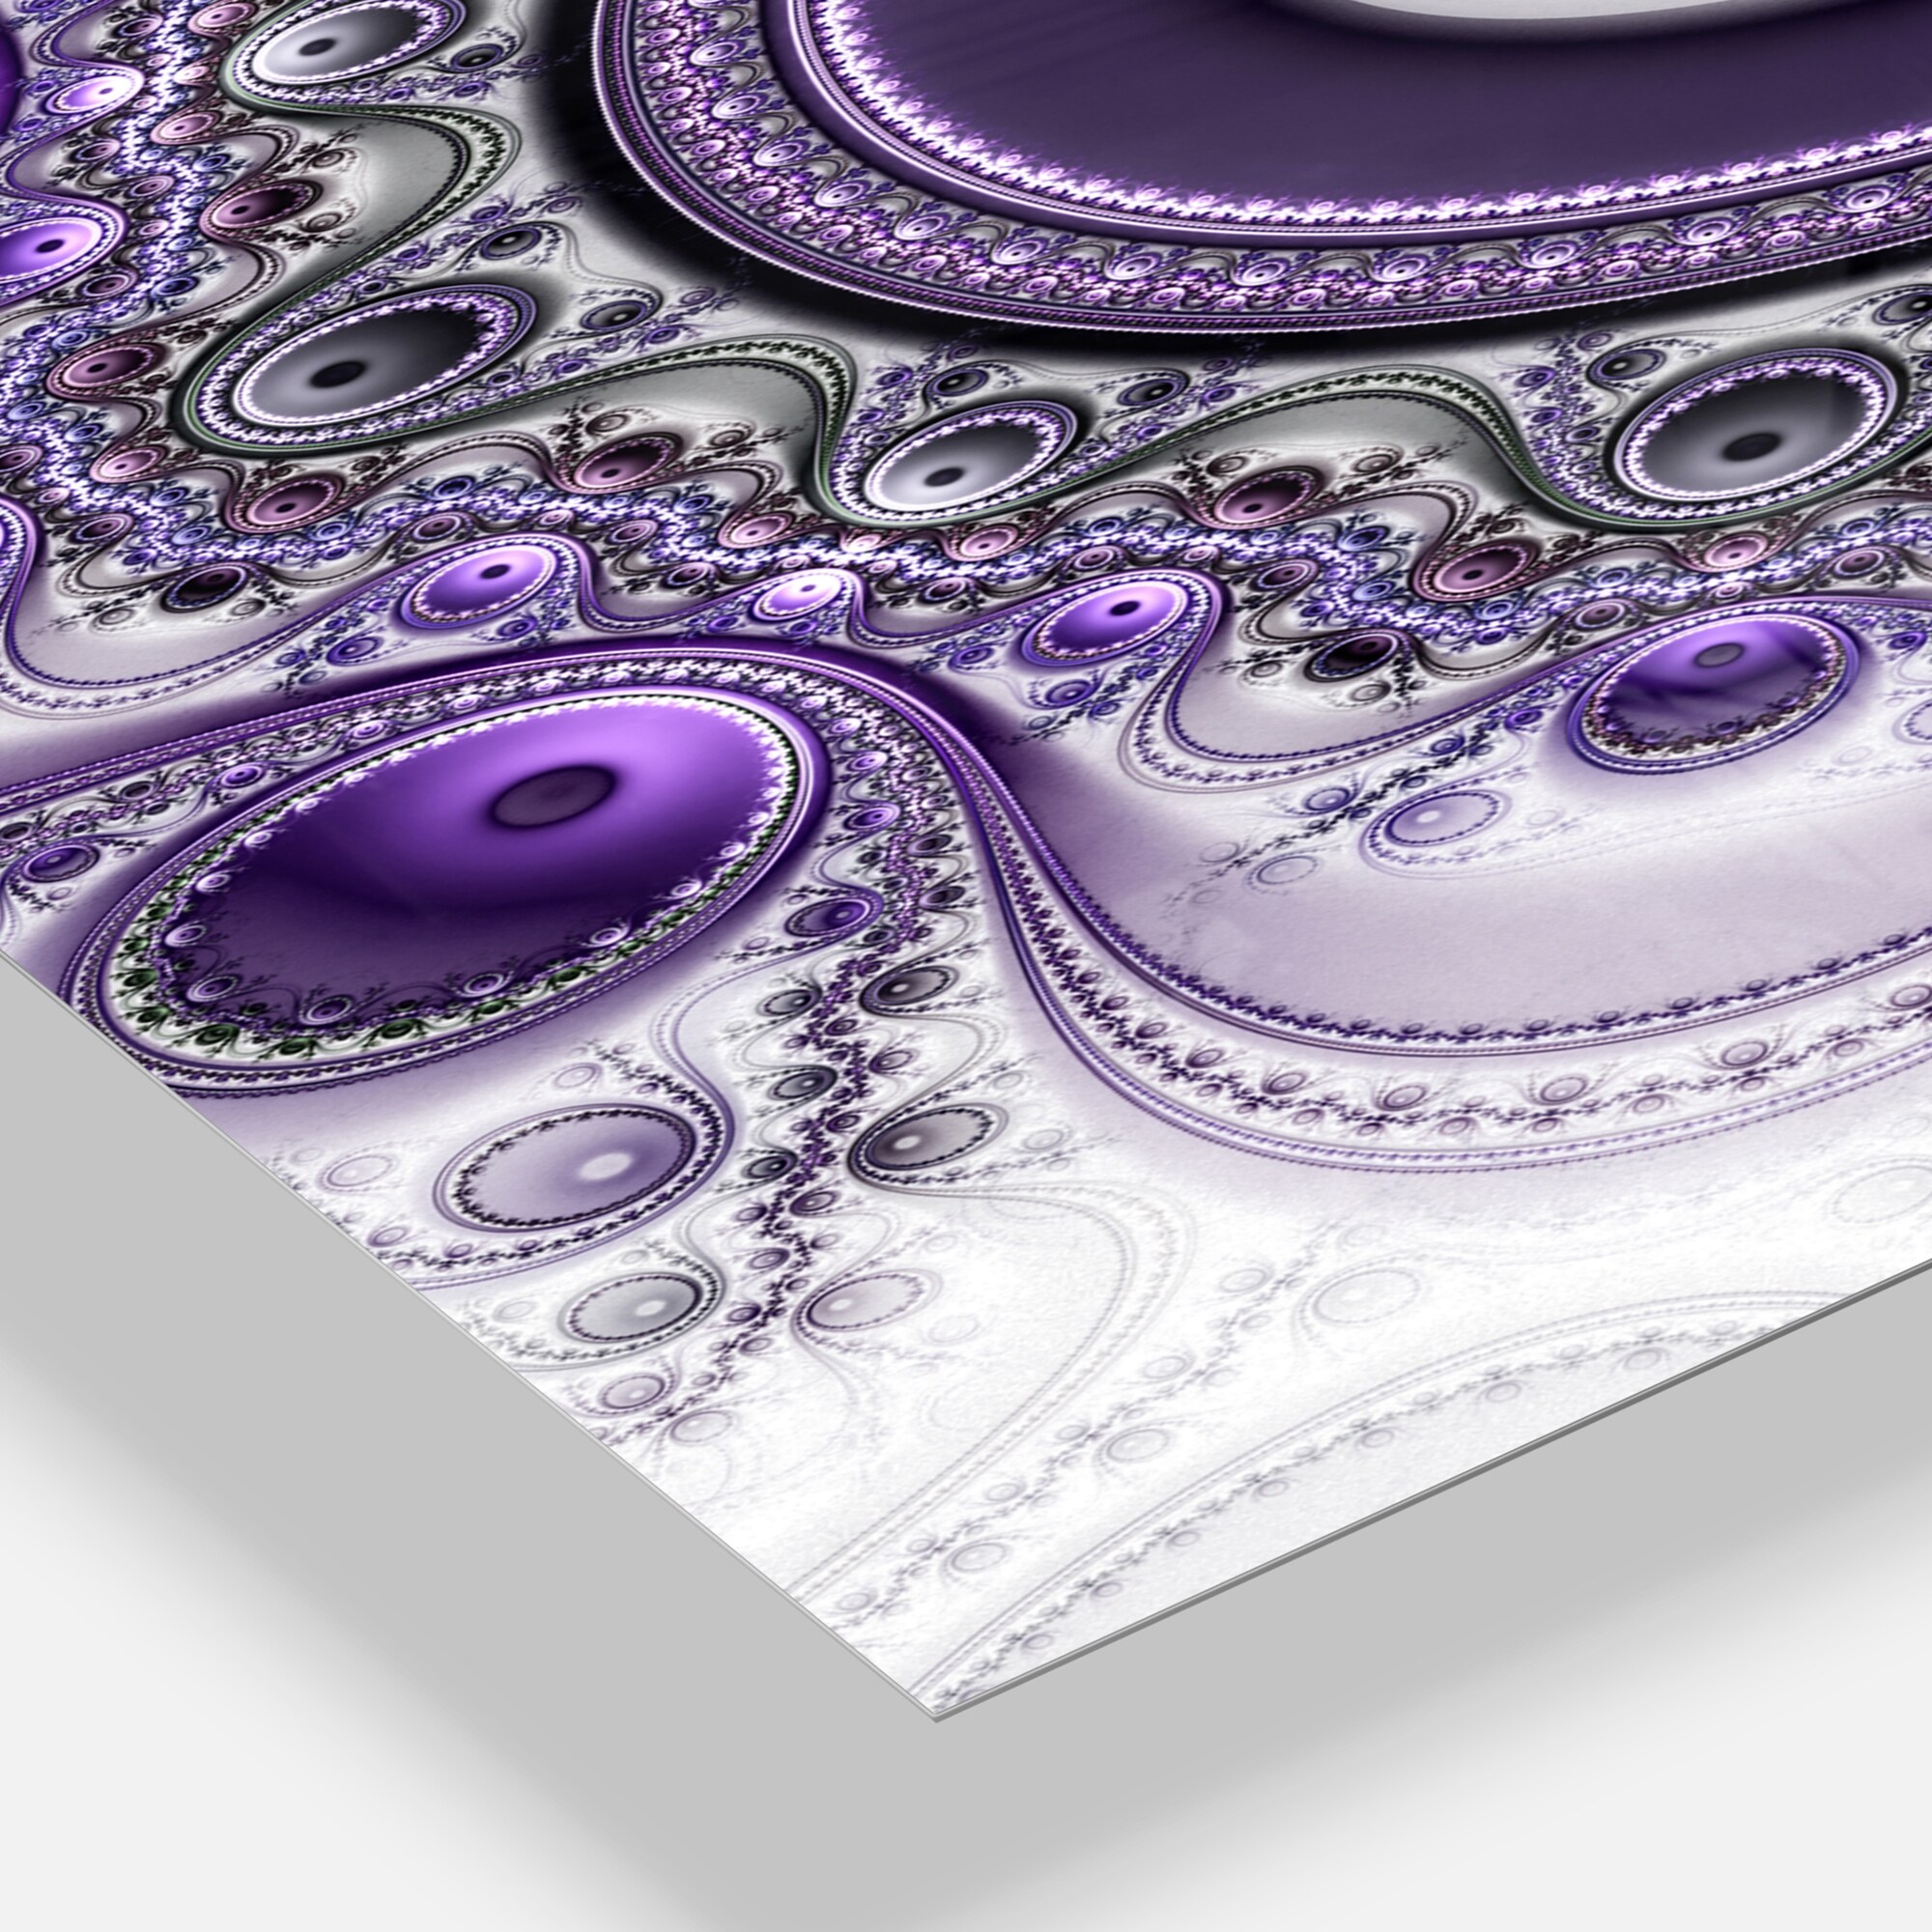 Designart 'Purple Fractal Pattern with Circles' Oversized Modern Wall CLock